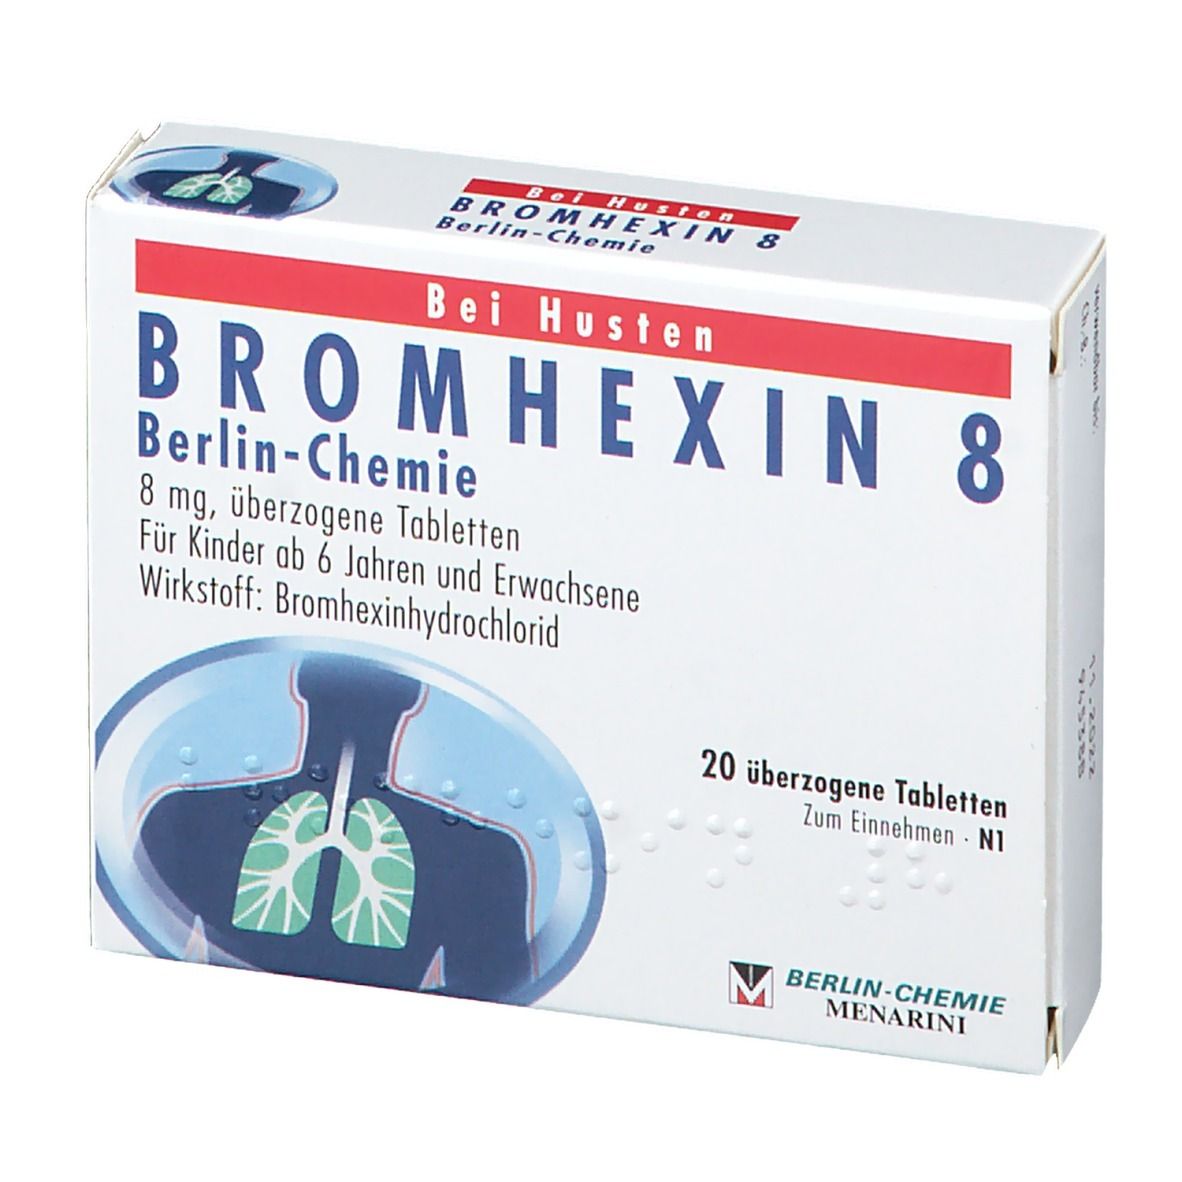 BROMHEXIN 8 Berlin-Chemie 8 mg Dragees